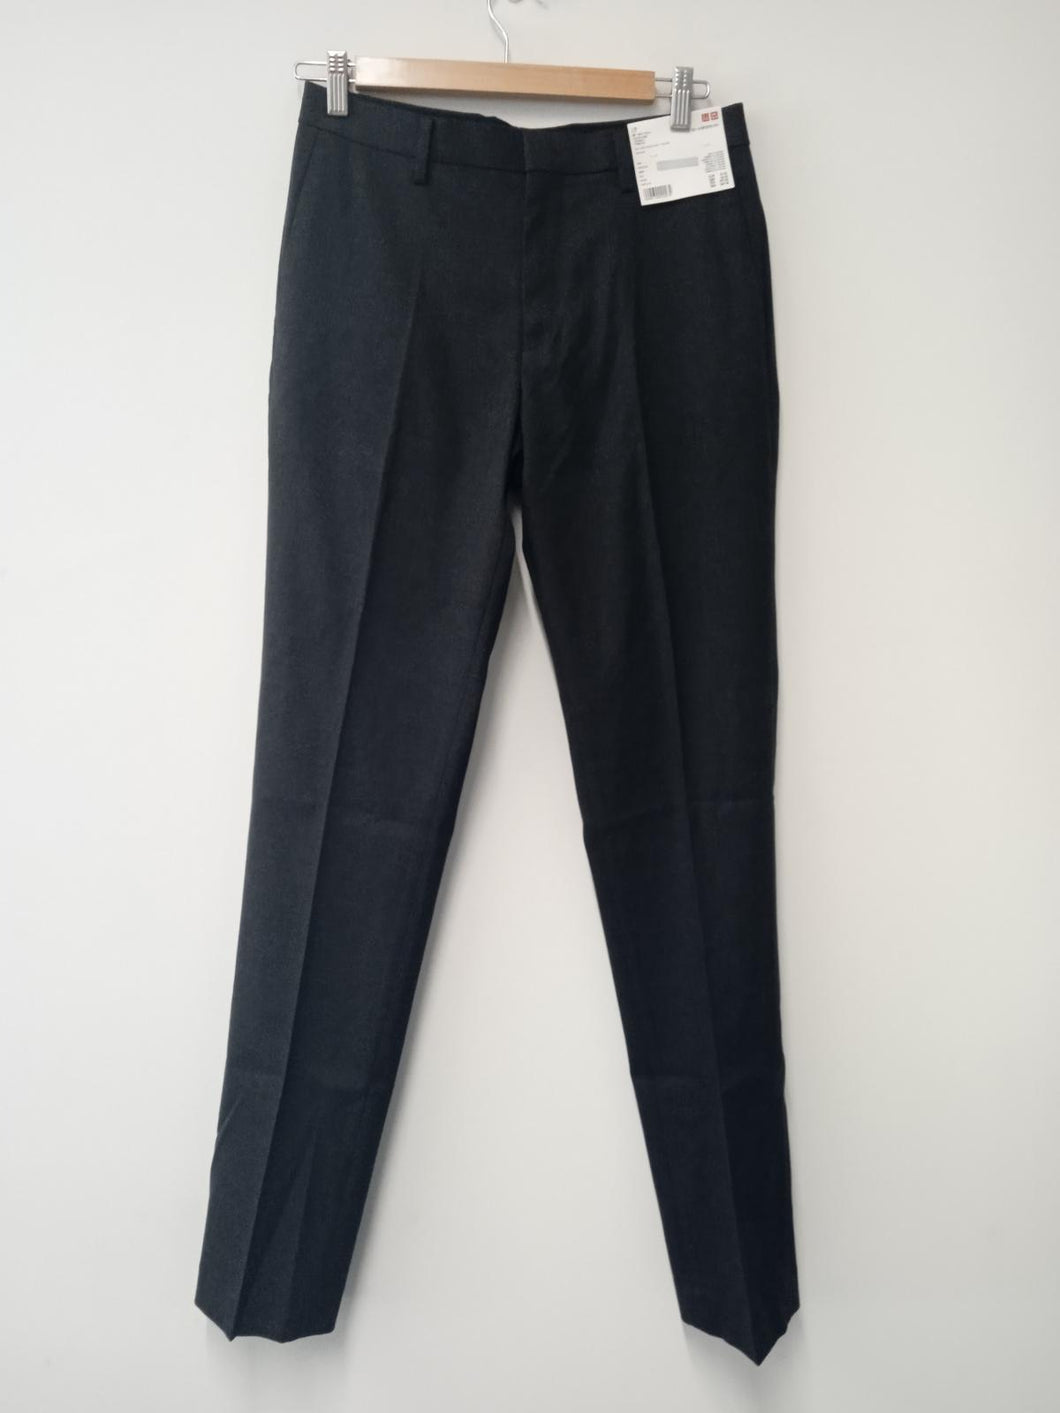 UNIQLO Men's Dark Grey Blue Easy Care Slim Fit Trousers Size UK W29L34 NEW